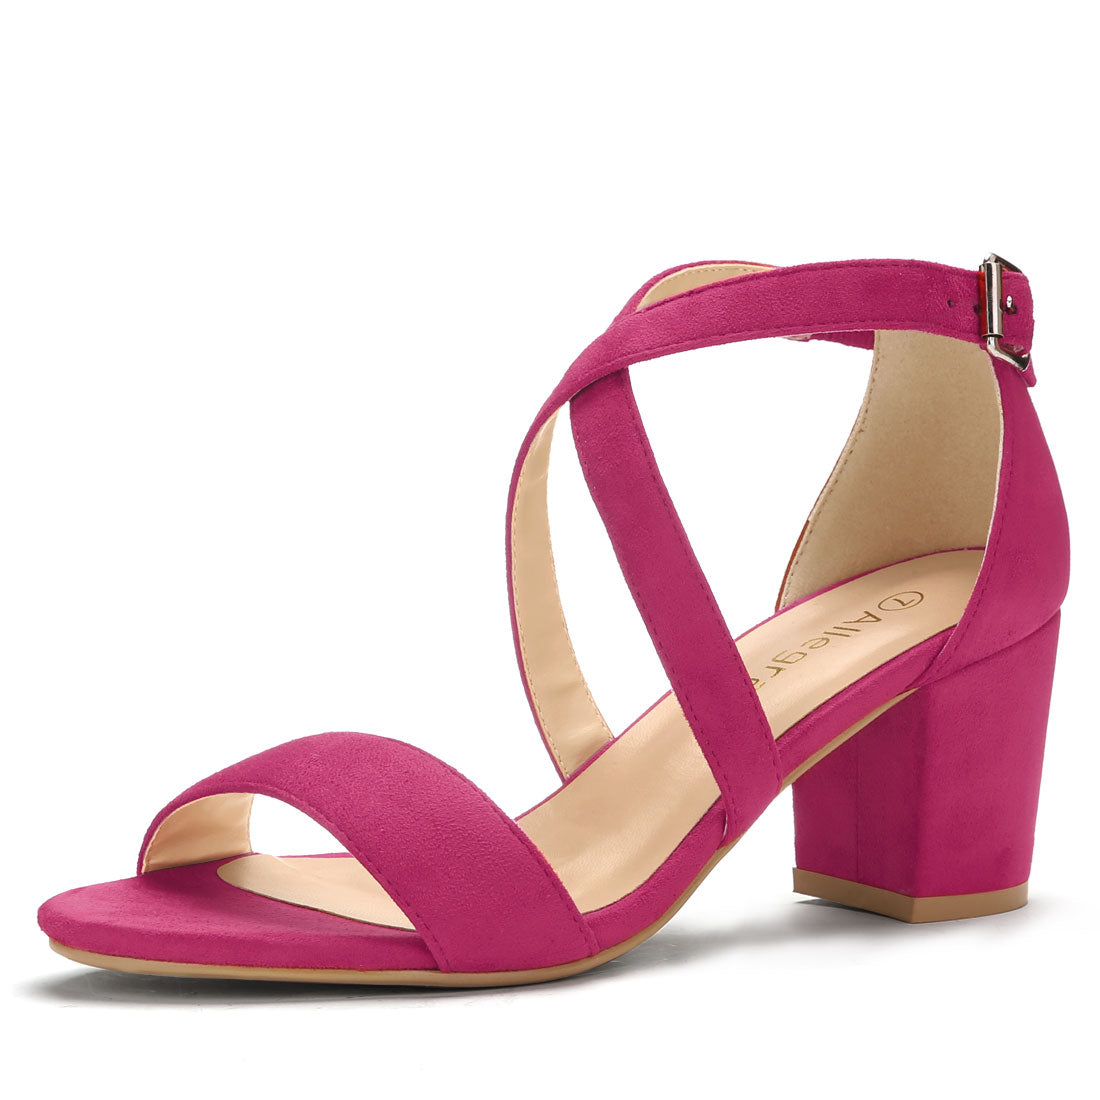 Allegra K Straps Mid Heel Ankle Strap Sandals Hot Pink